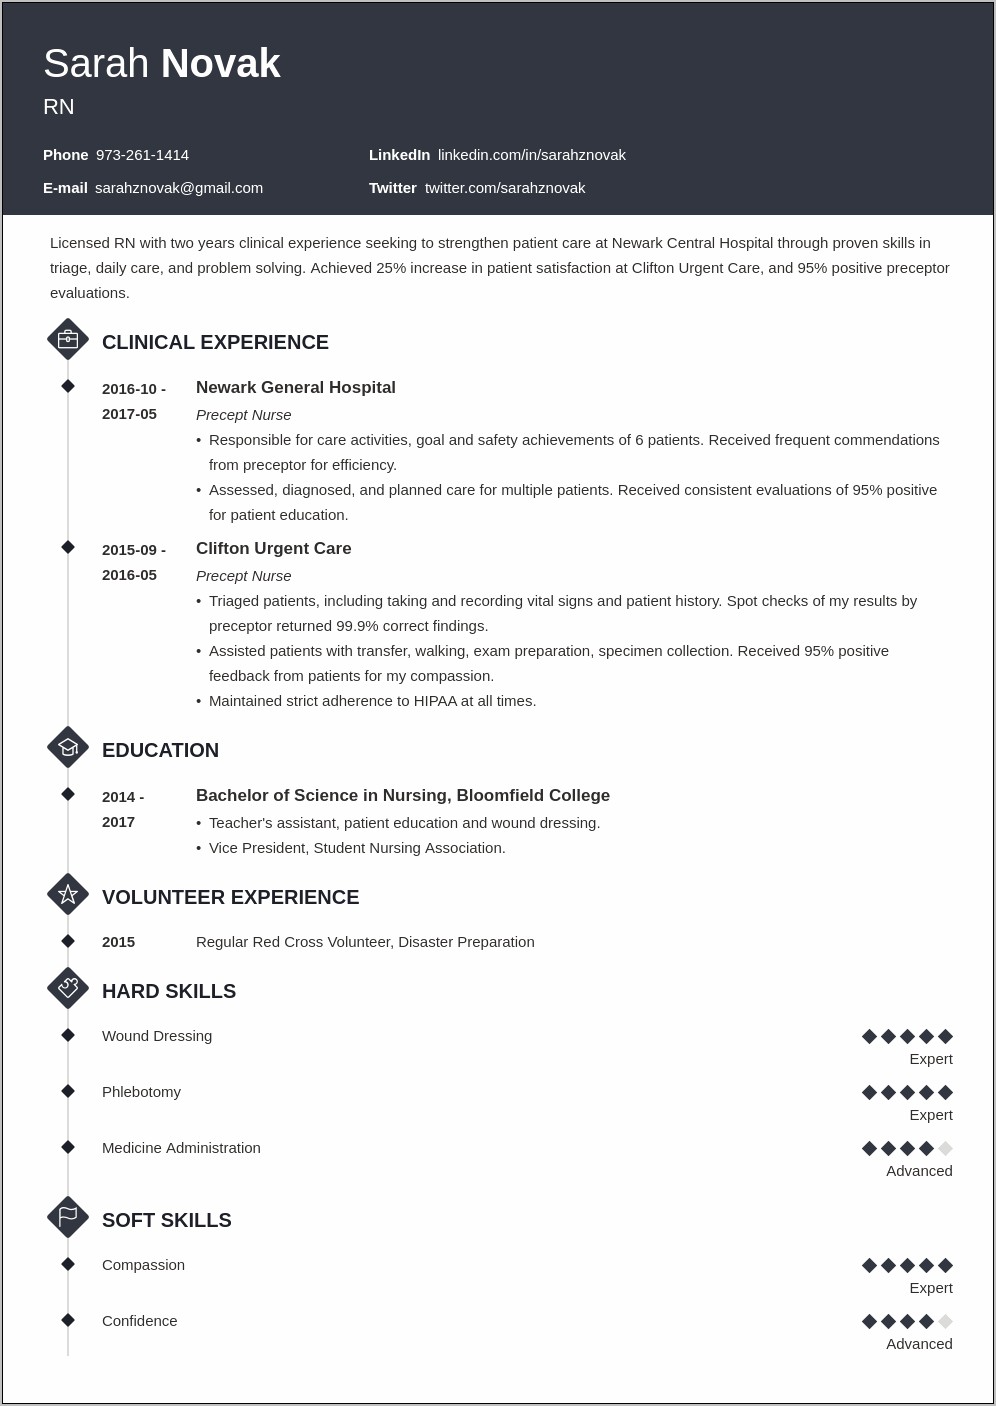 Job Description For Student Nurse For Resume